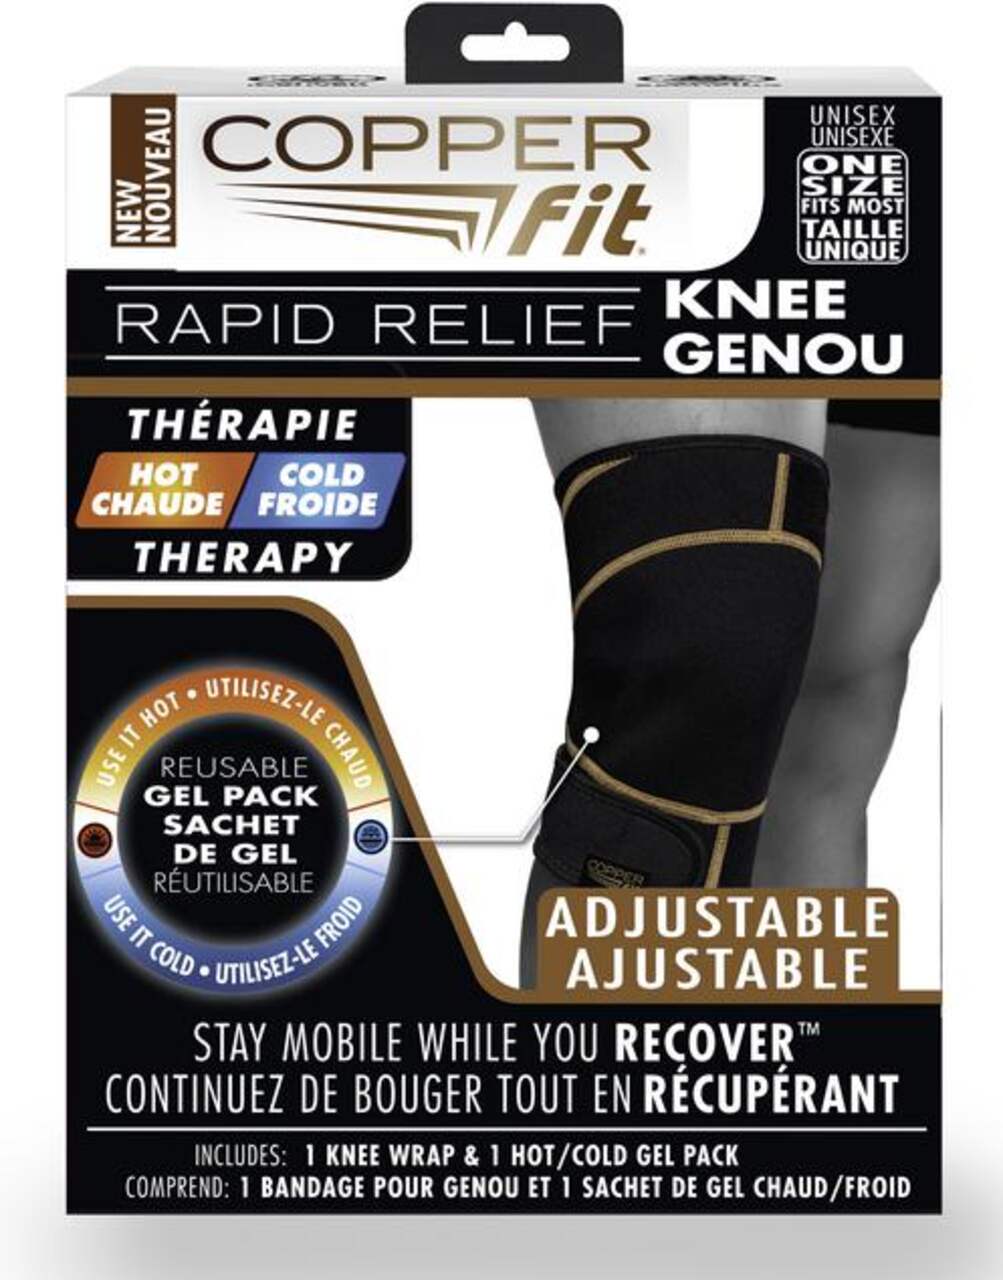 Copper Fit Rapid Relief Shoulder